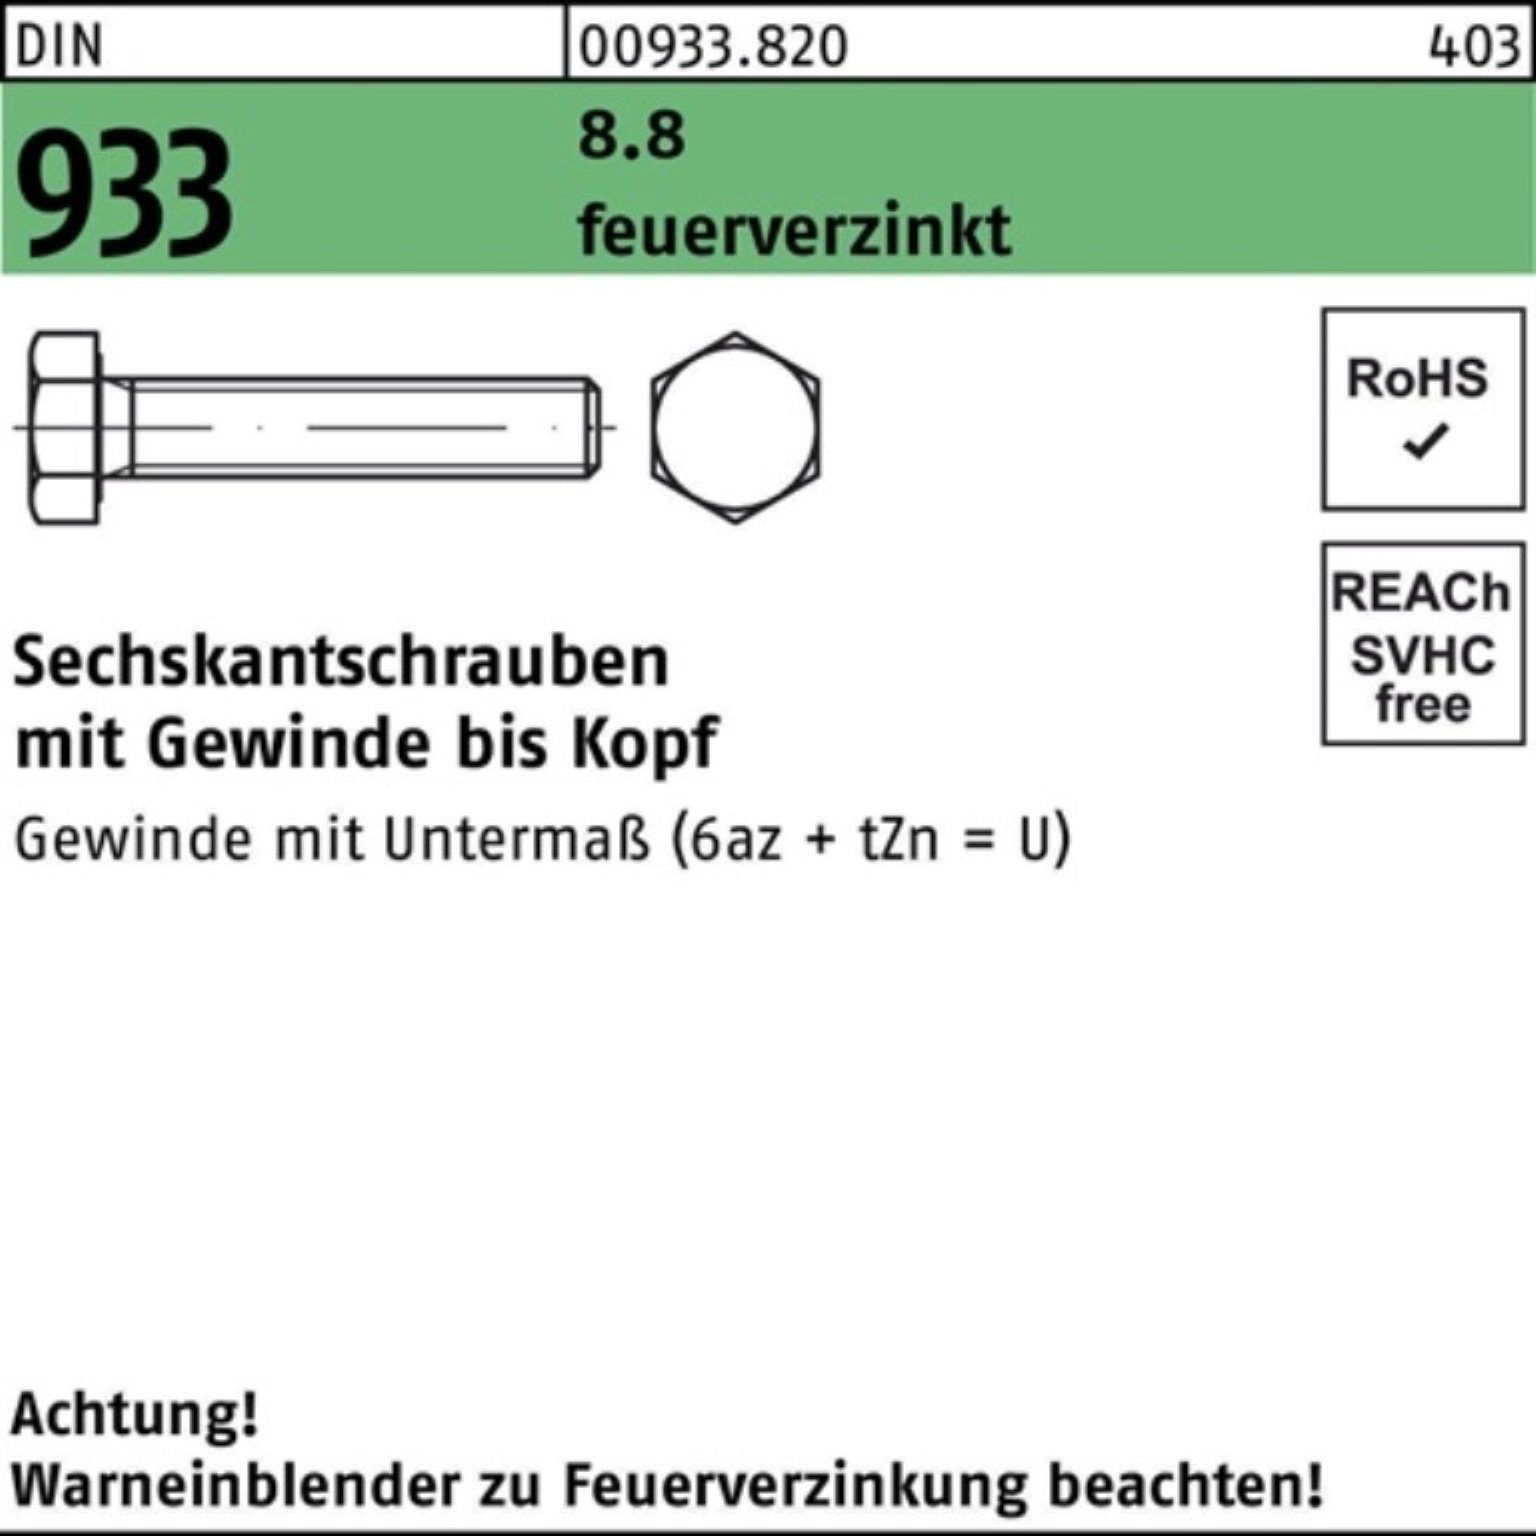 25 feuerverz. 100er VG Sechskantschraube 8.8 Pack M20x 30 DIN Stü 933 Sechskantschraube Reyher